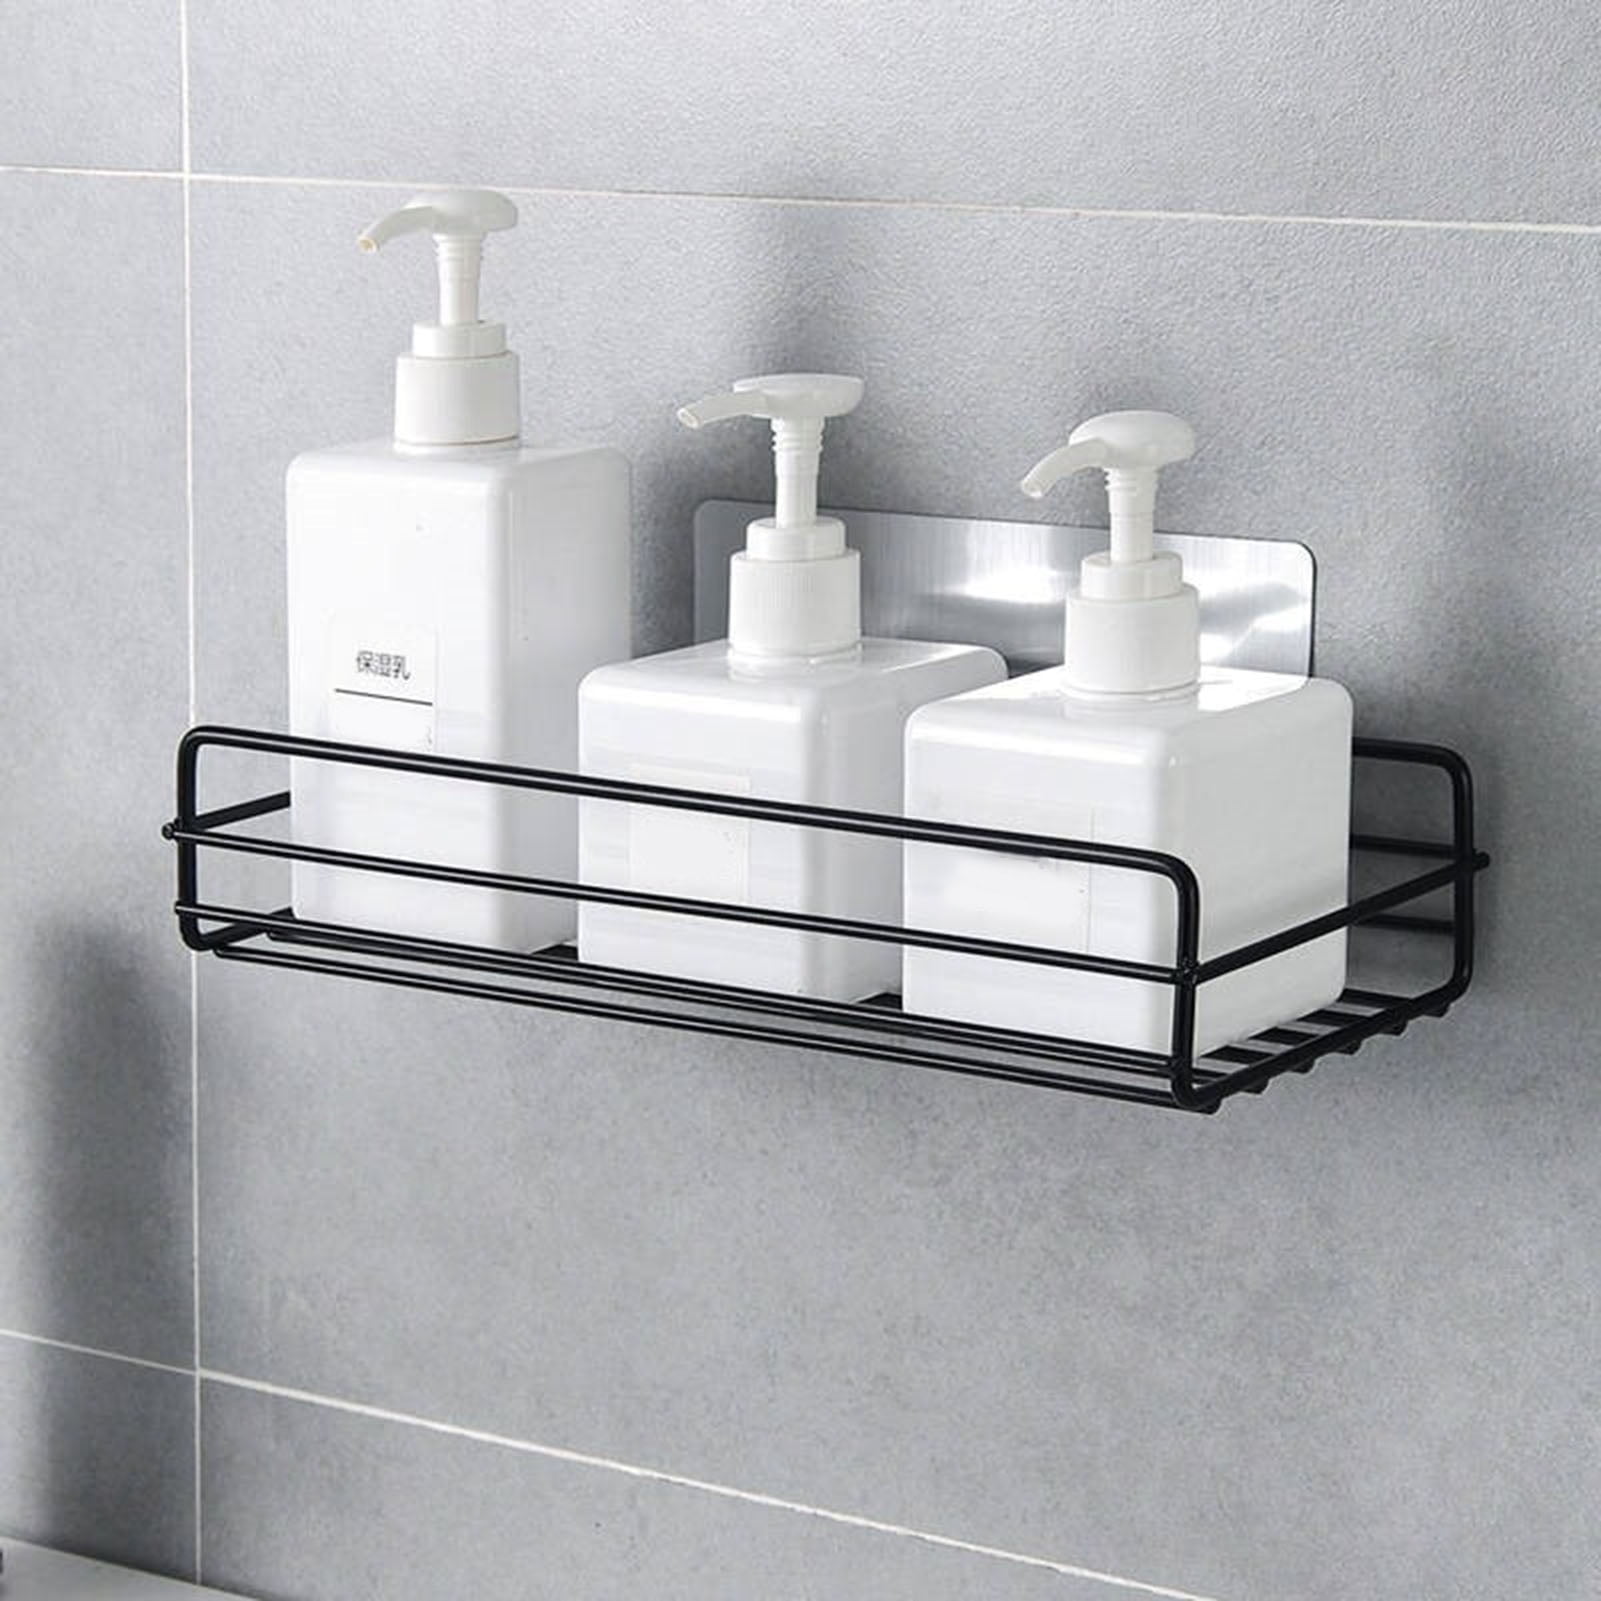 Details about   3pcs Soap Plate Dish Wooden Rack Holder Bathroom Shower Storage Bath Bathroom 